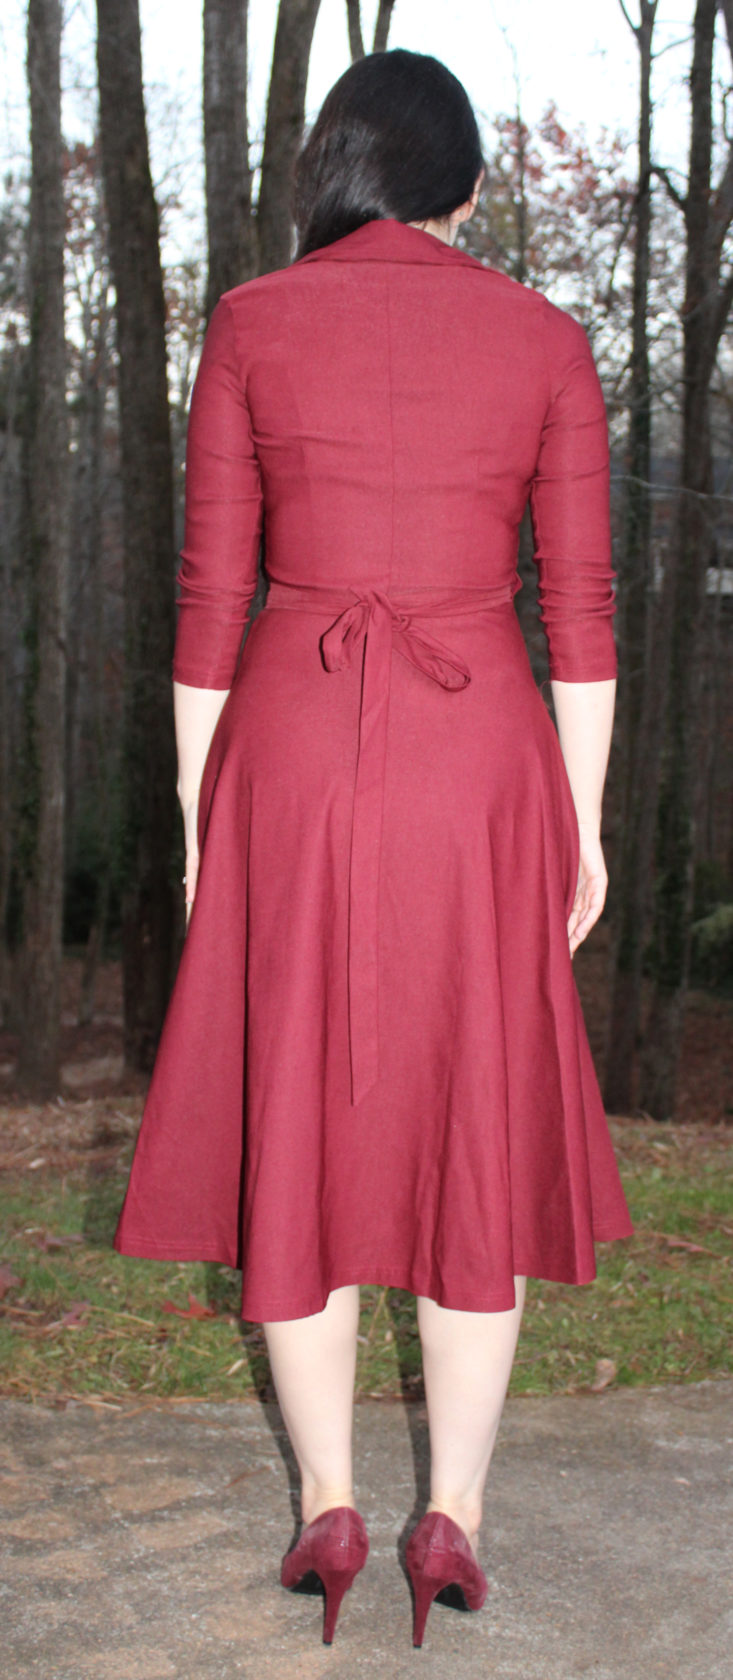 Unique Vintage November 2018 Review - Burgundy Red Stretch Sleeved Anna Wrap Dress Back